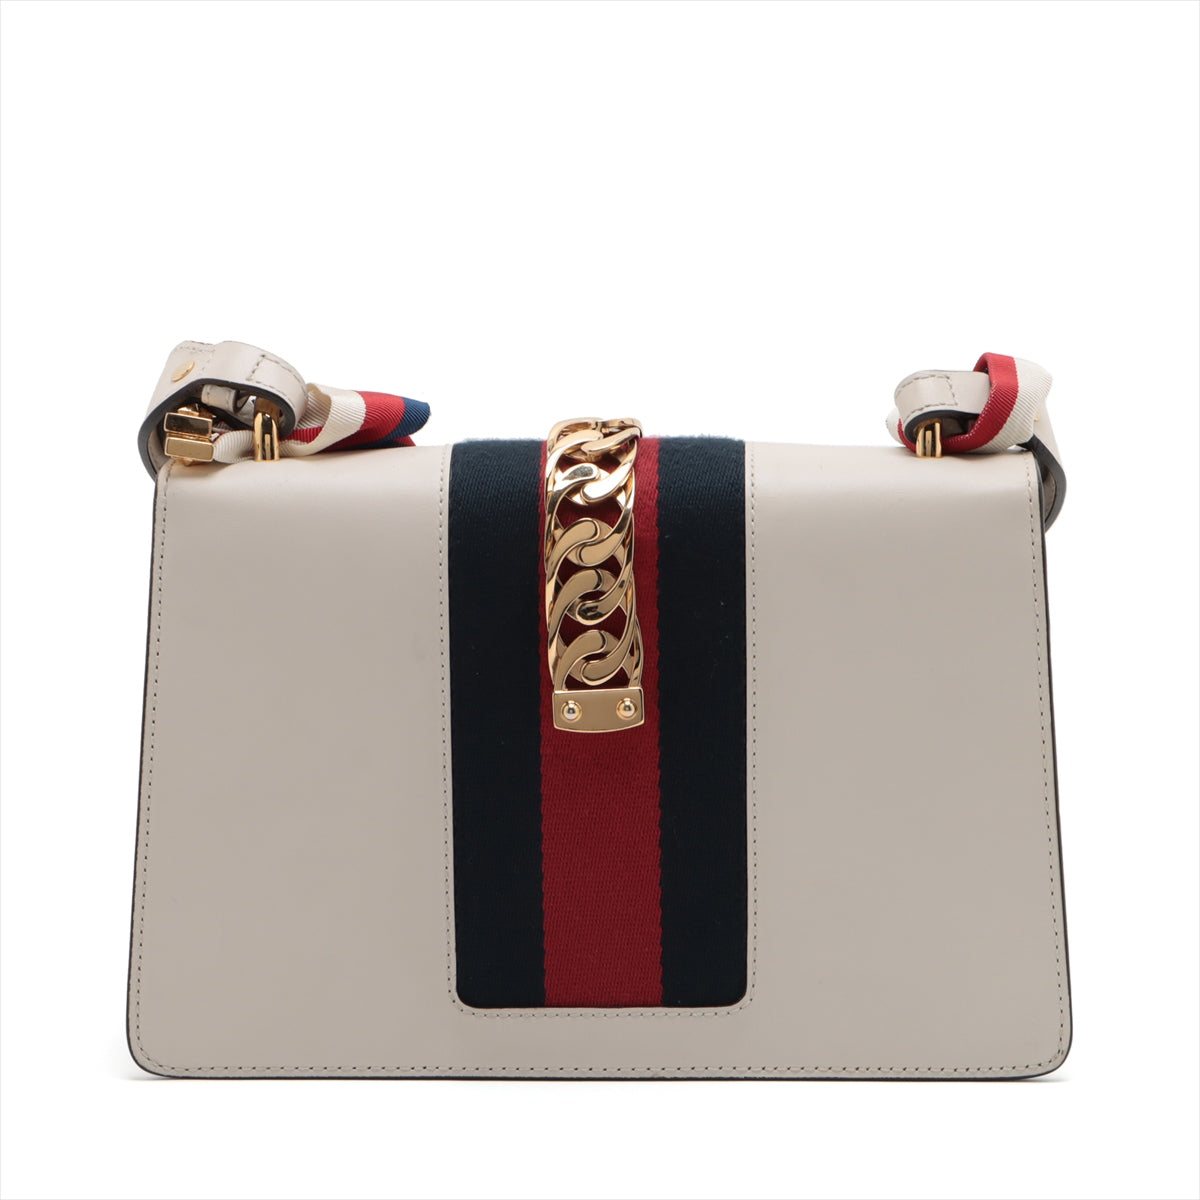 Gucci Sylvie Leather Shoulder Bag White 421882